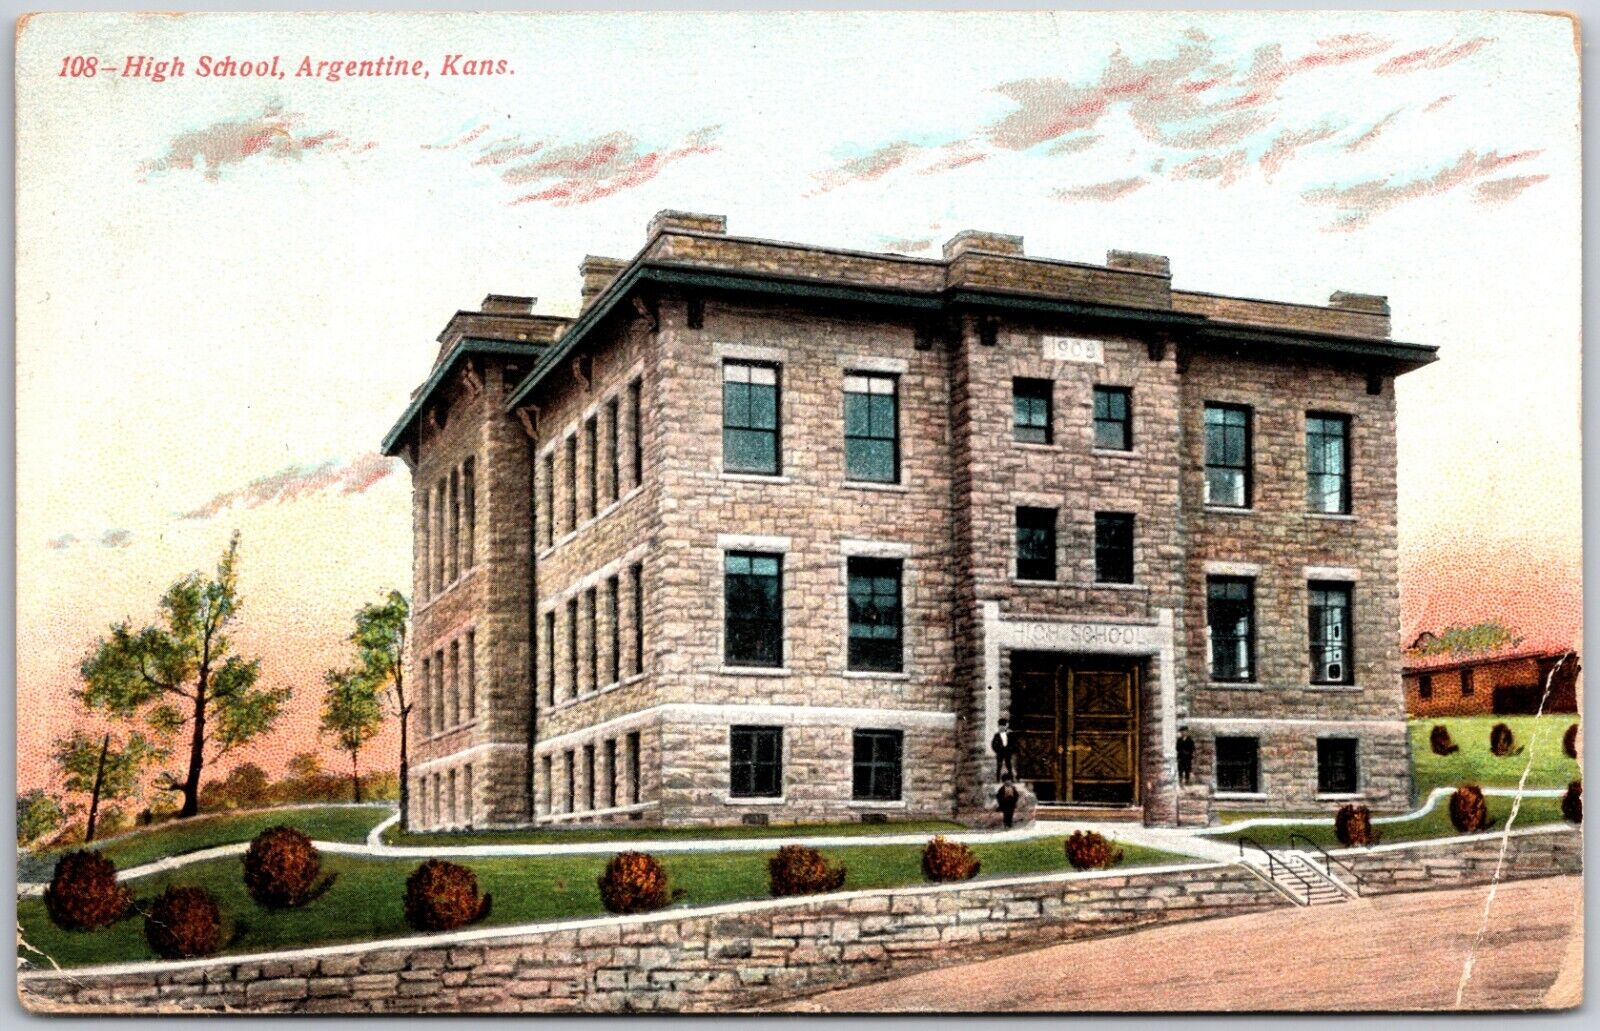 Argentine KS-Kansas, 1908 High School Street View Stone Building Old Postcard